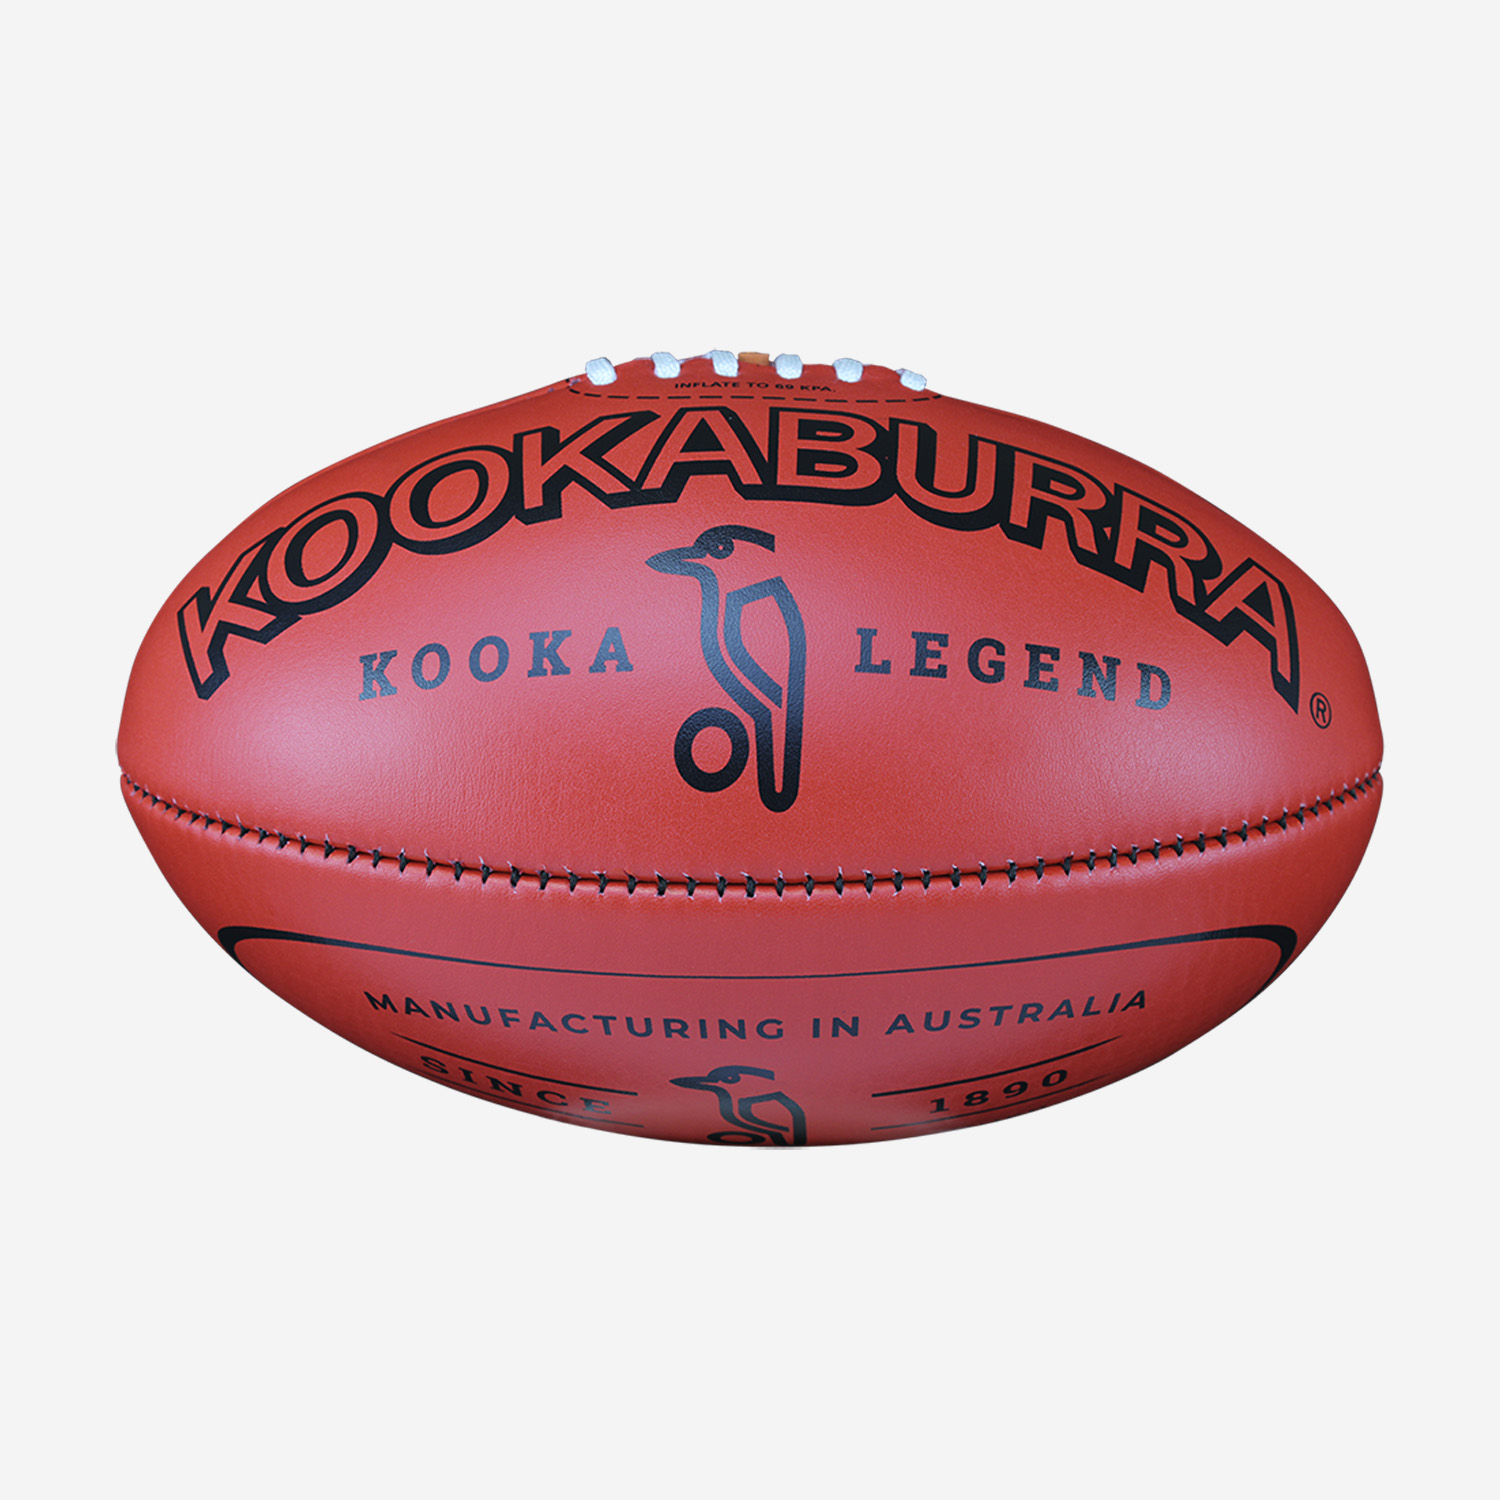 KOOKABURRA LEGEND FOOTBALLS